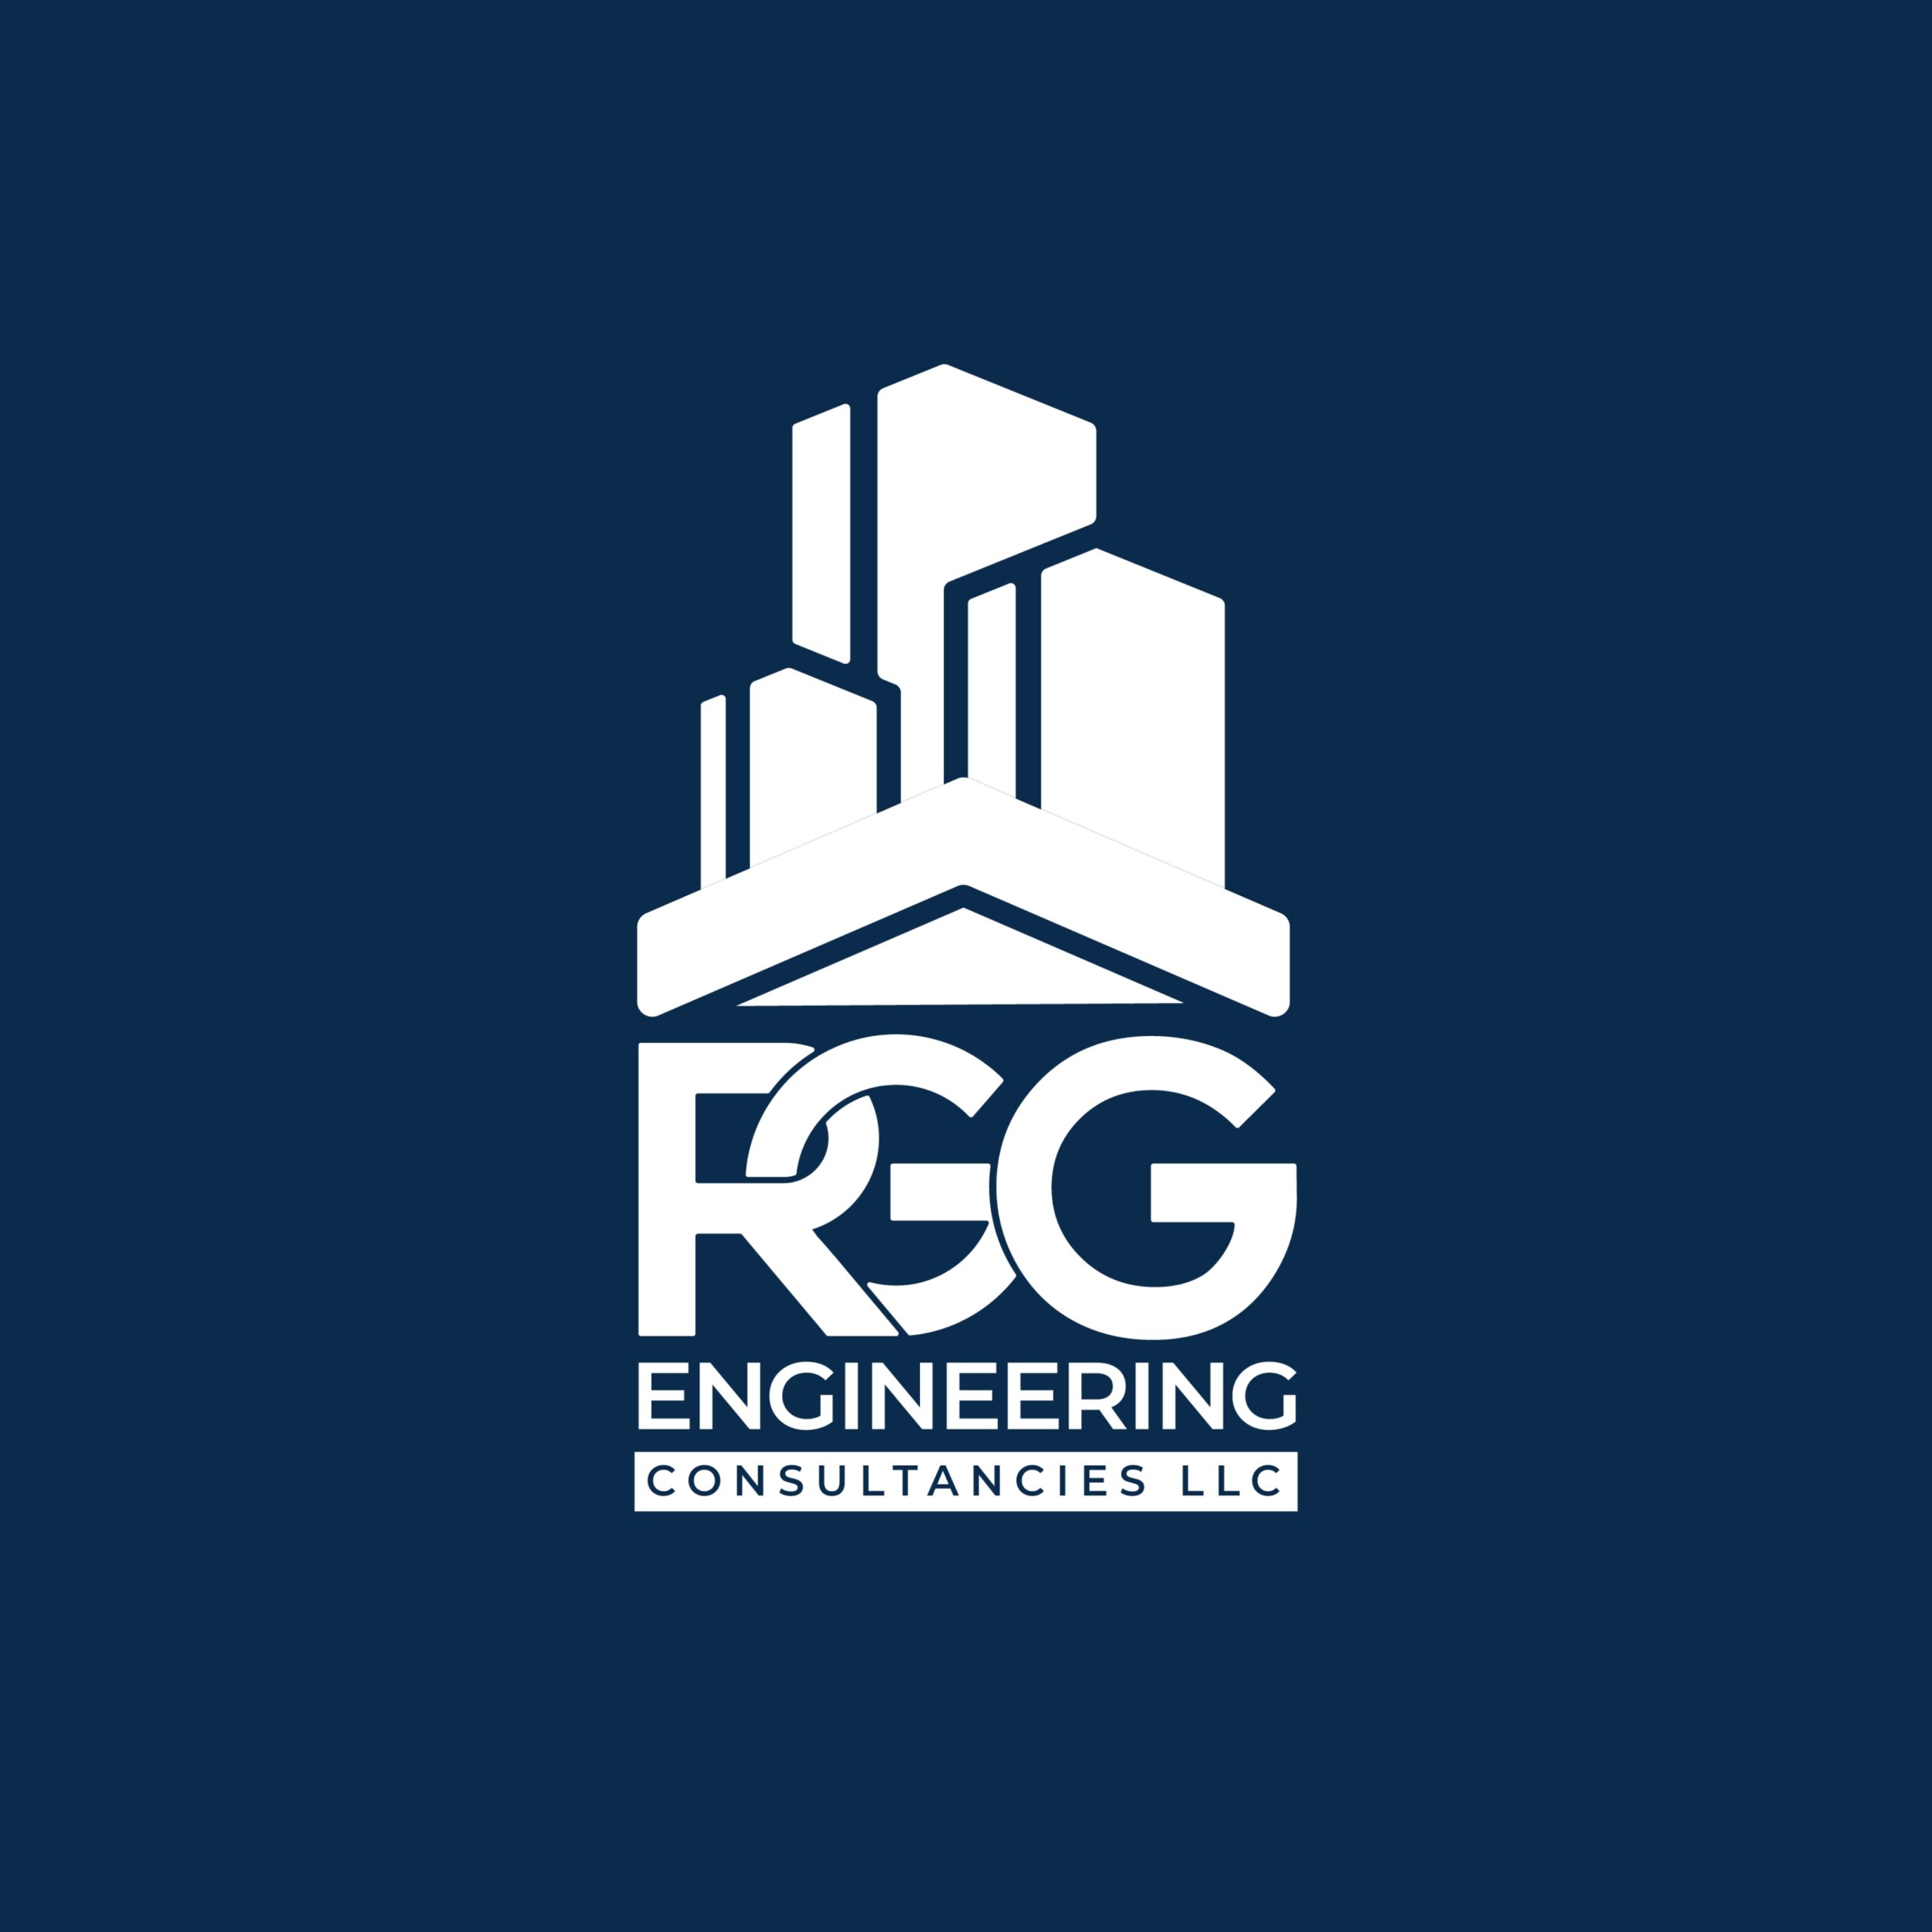 RGG ENGINEERING CONSULTANCIES LLC